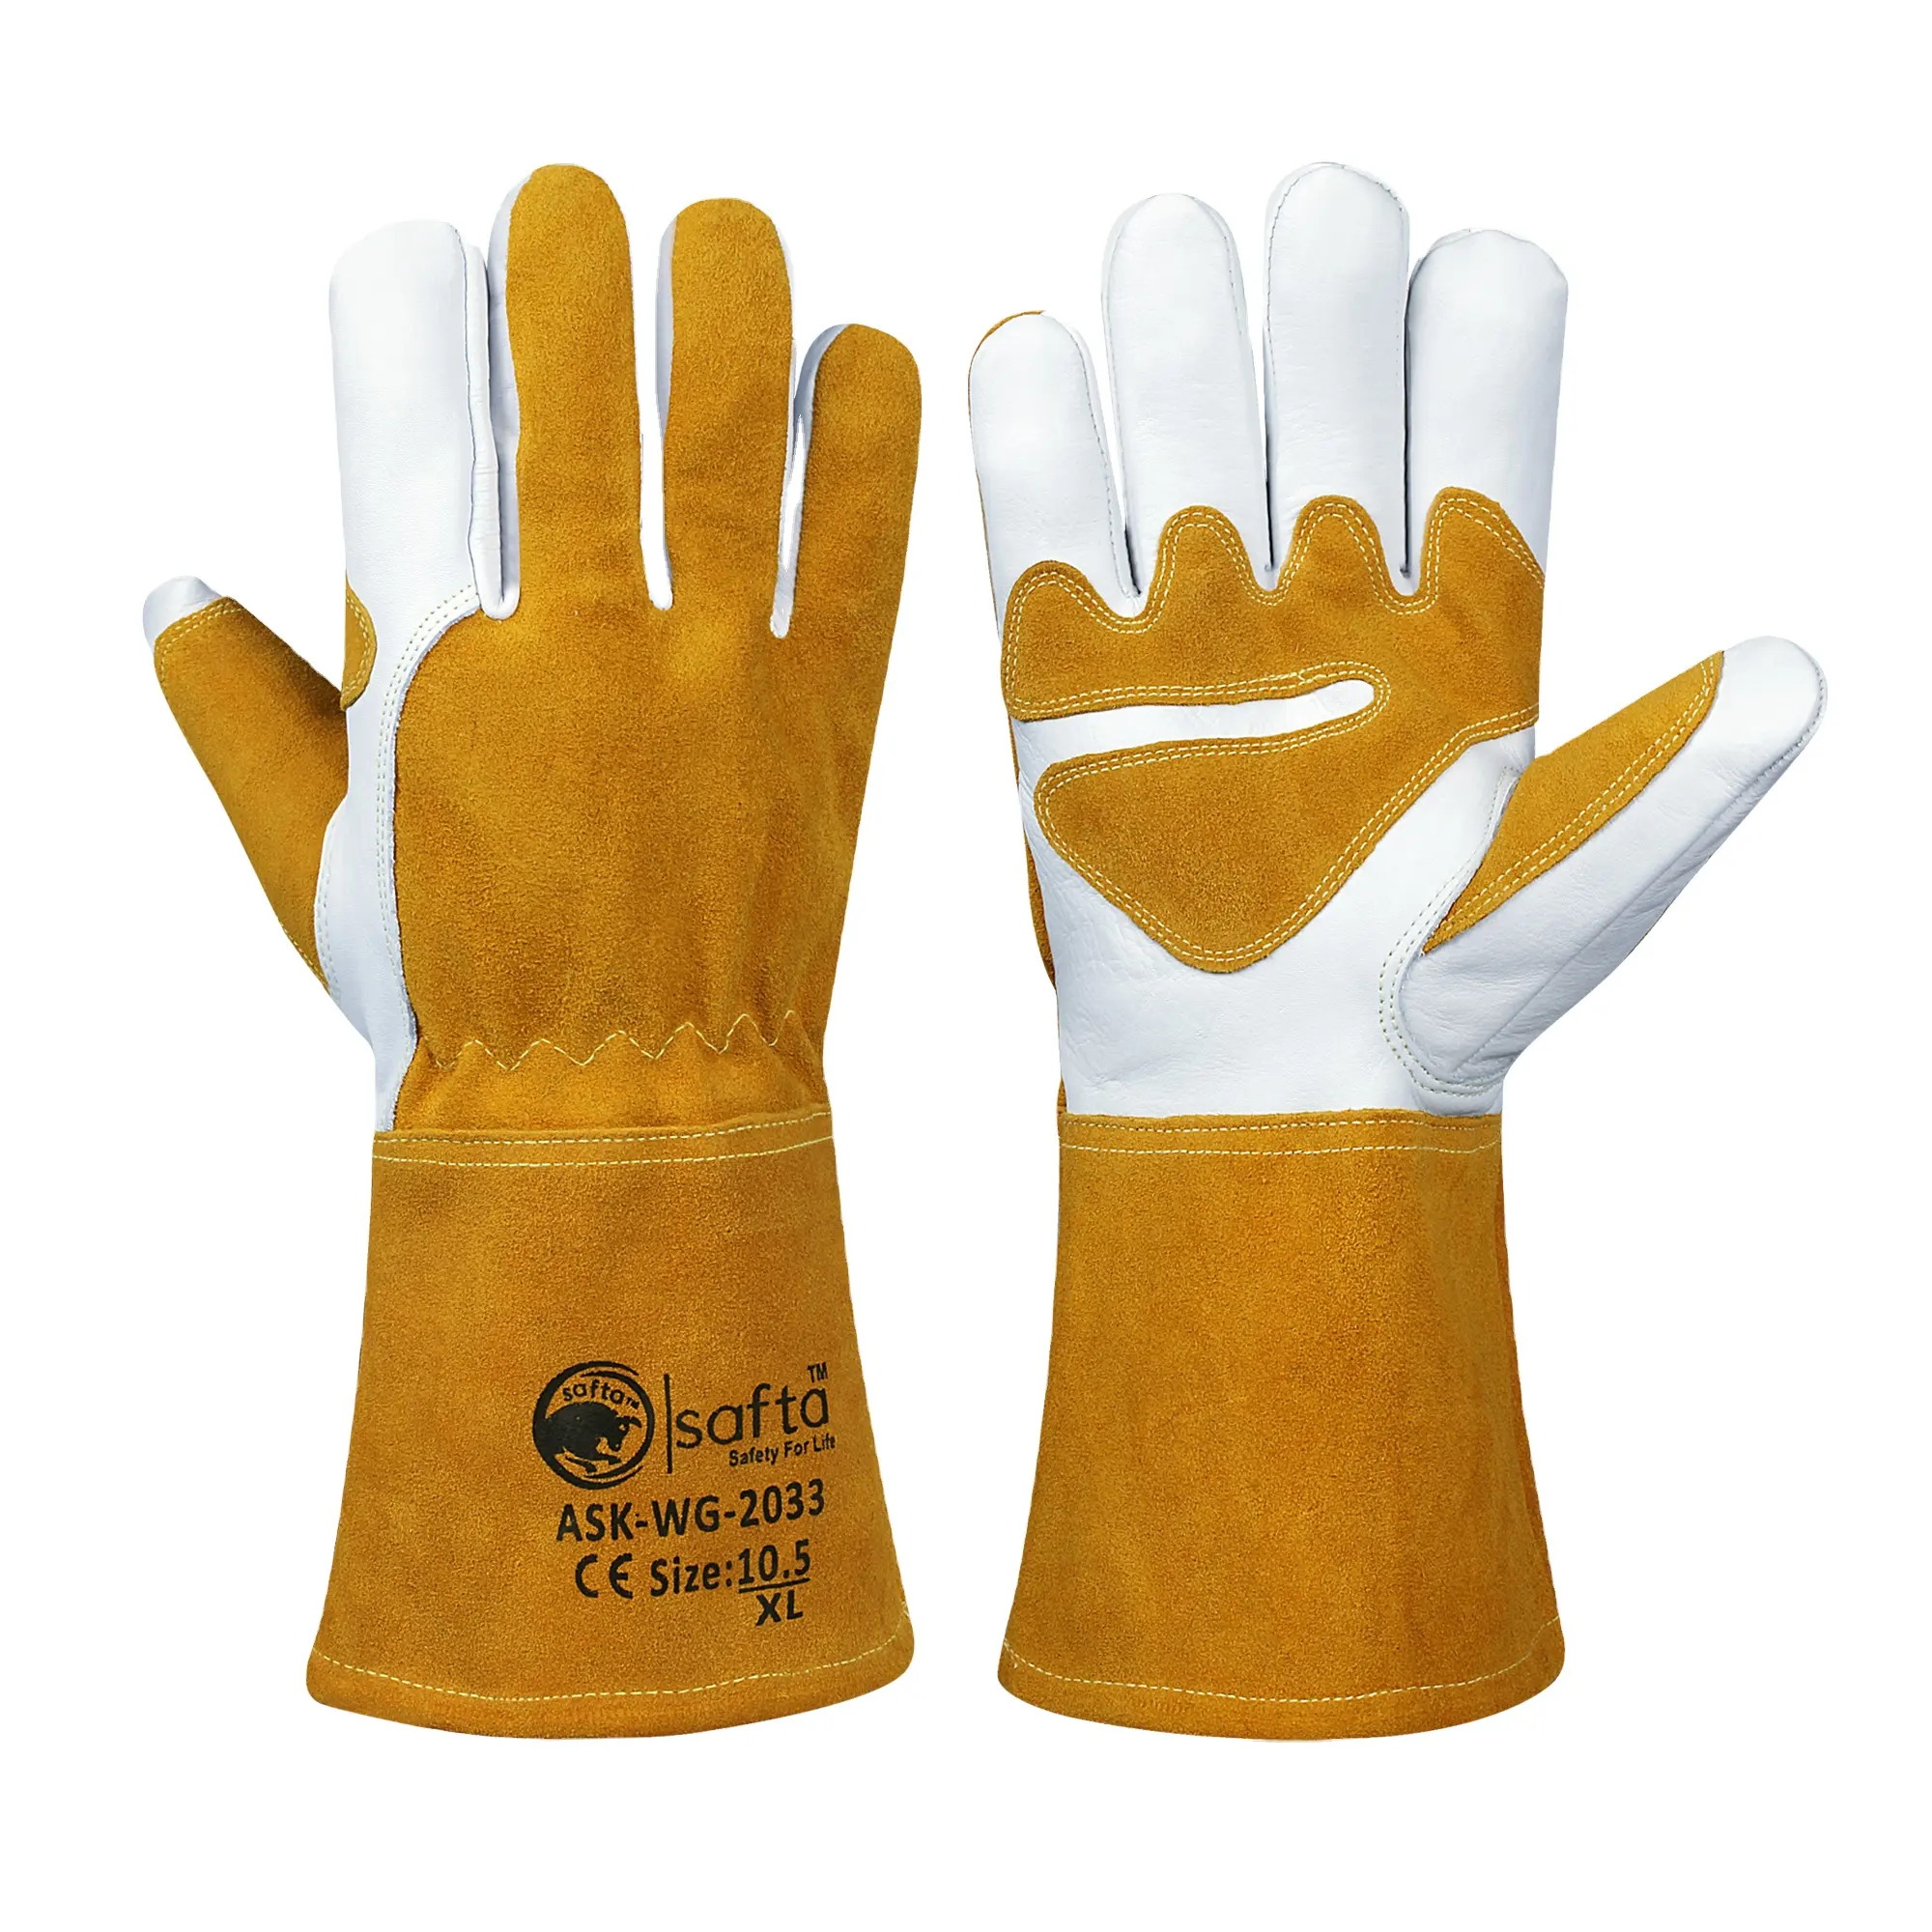 Extreme Heat Resistant Welding Gloves Heavy Duty Industrial MIG Welding Gloves Safety Gloves Leather Heavy Work Fully Palm SAFTA